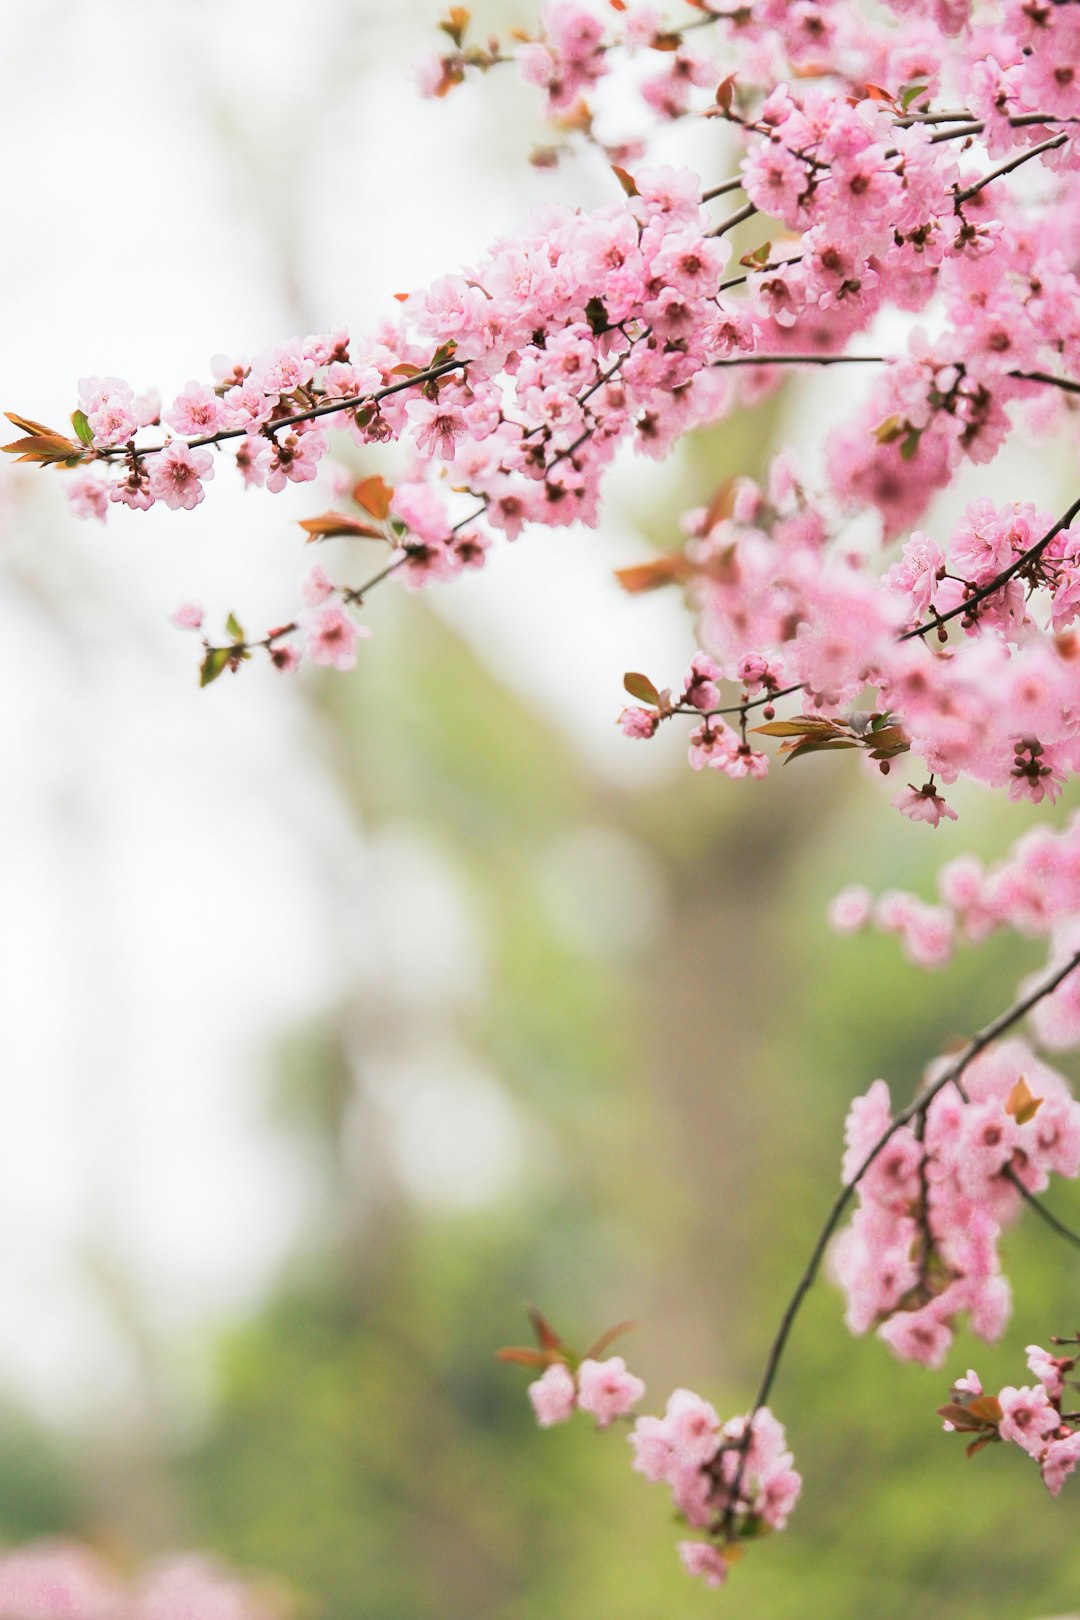 feijoa, nematodes, selective focus photography of pink sakura